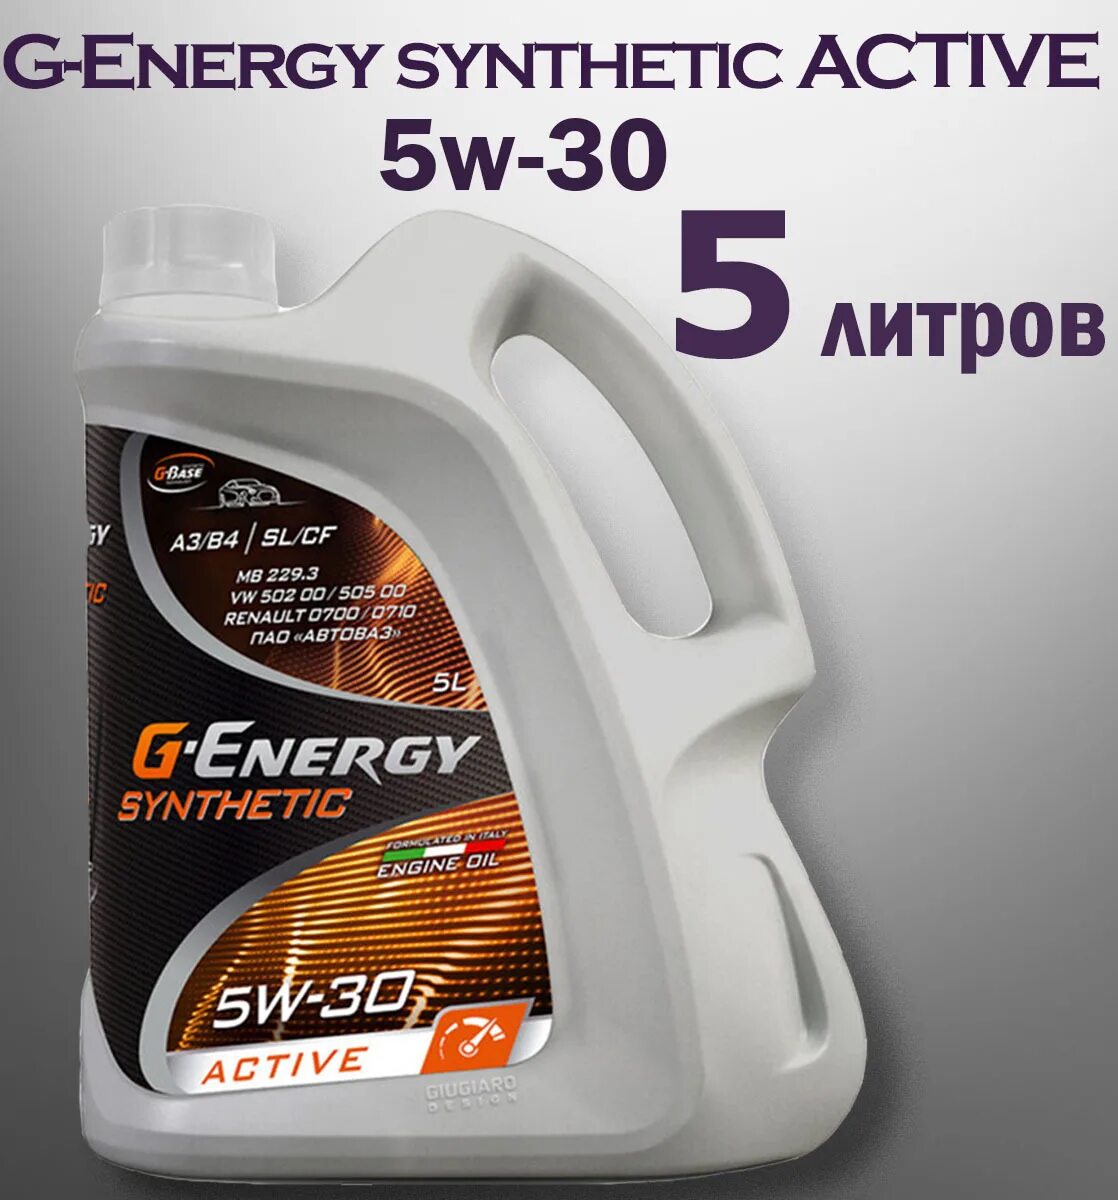 G energy synthetic active отзывы. Масло g-Energy Syntetic Activ 5w30. G-Energy Synthetic Active 5w-30. G Energy 5w30 синтетика. G Энерджи 5w30 синтетика.